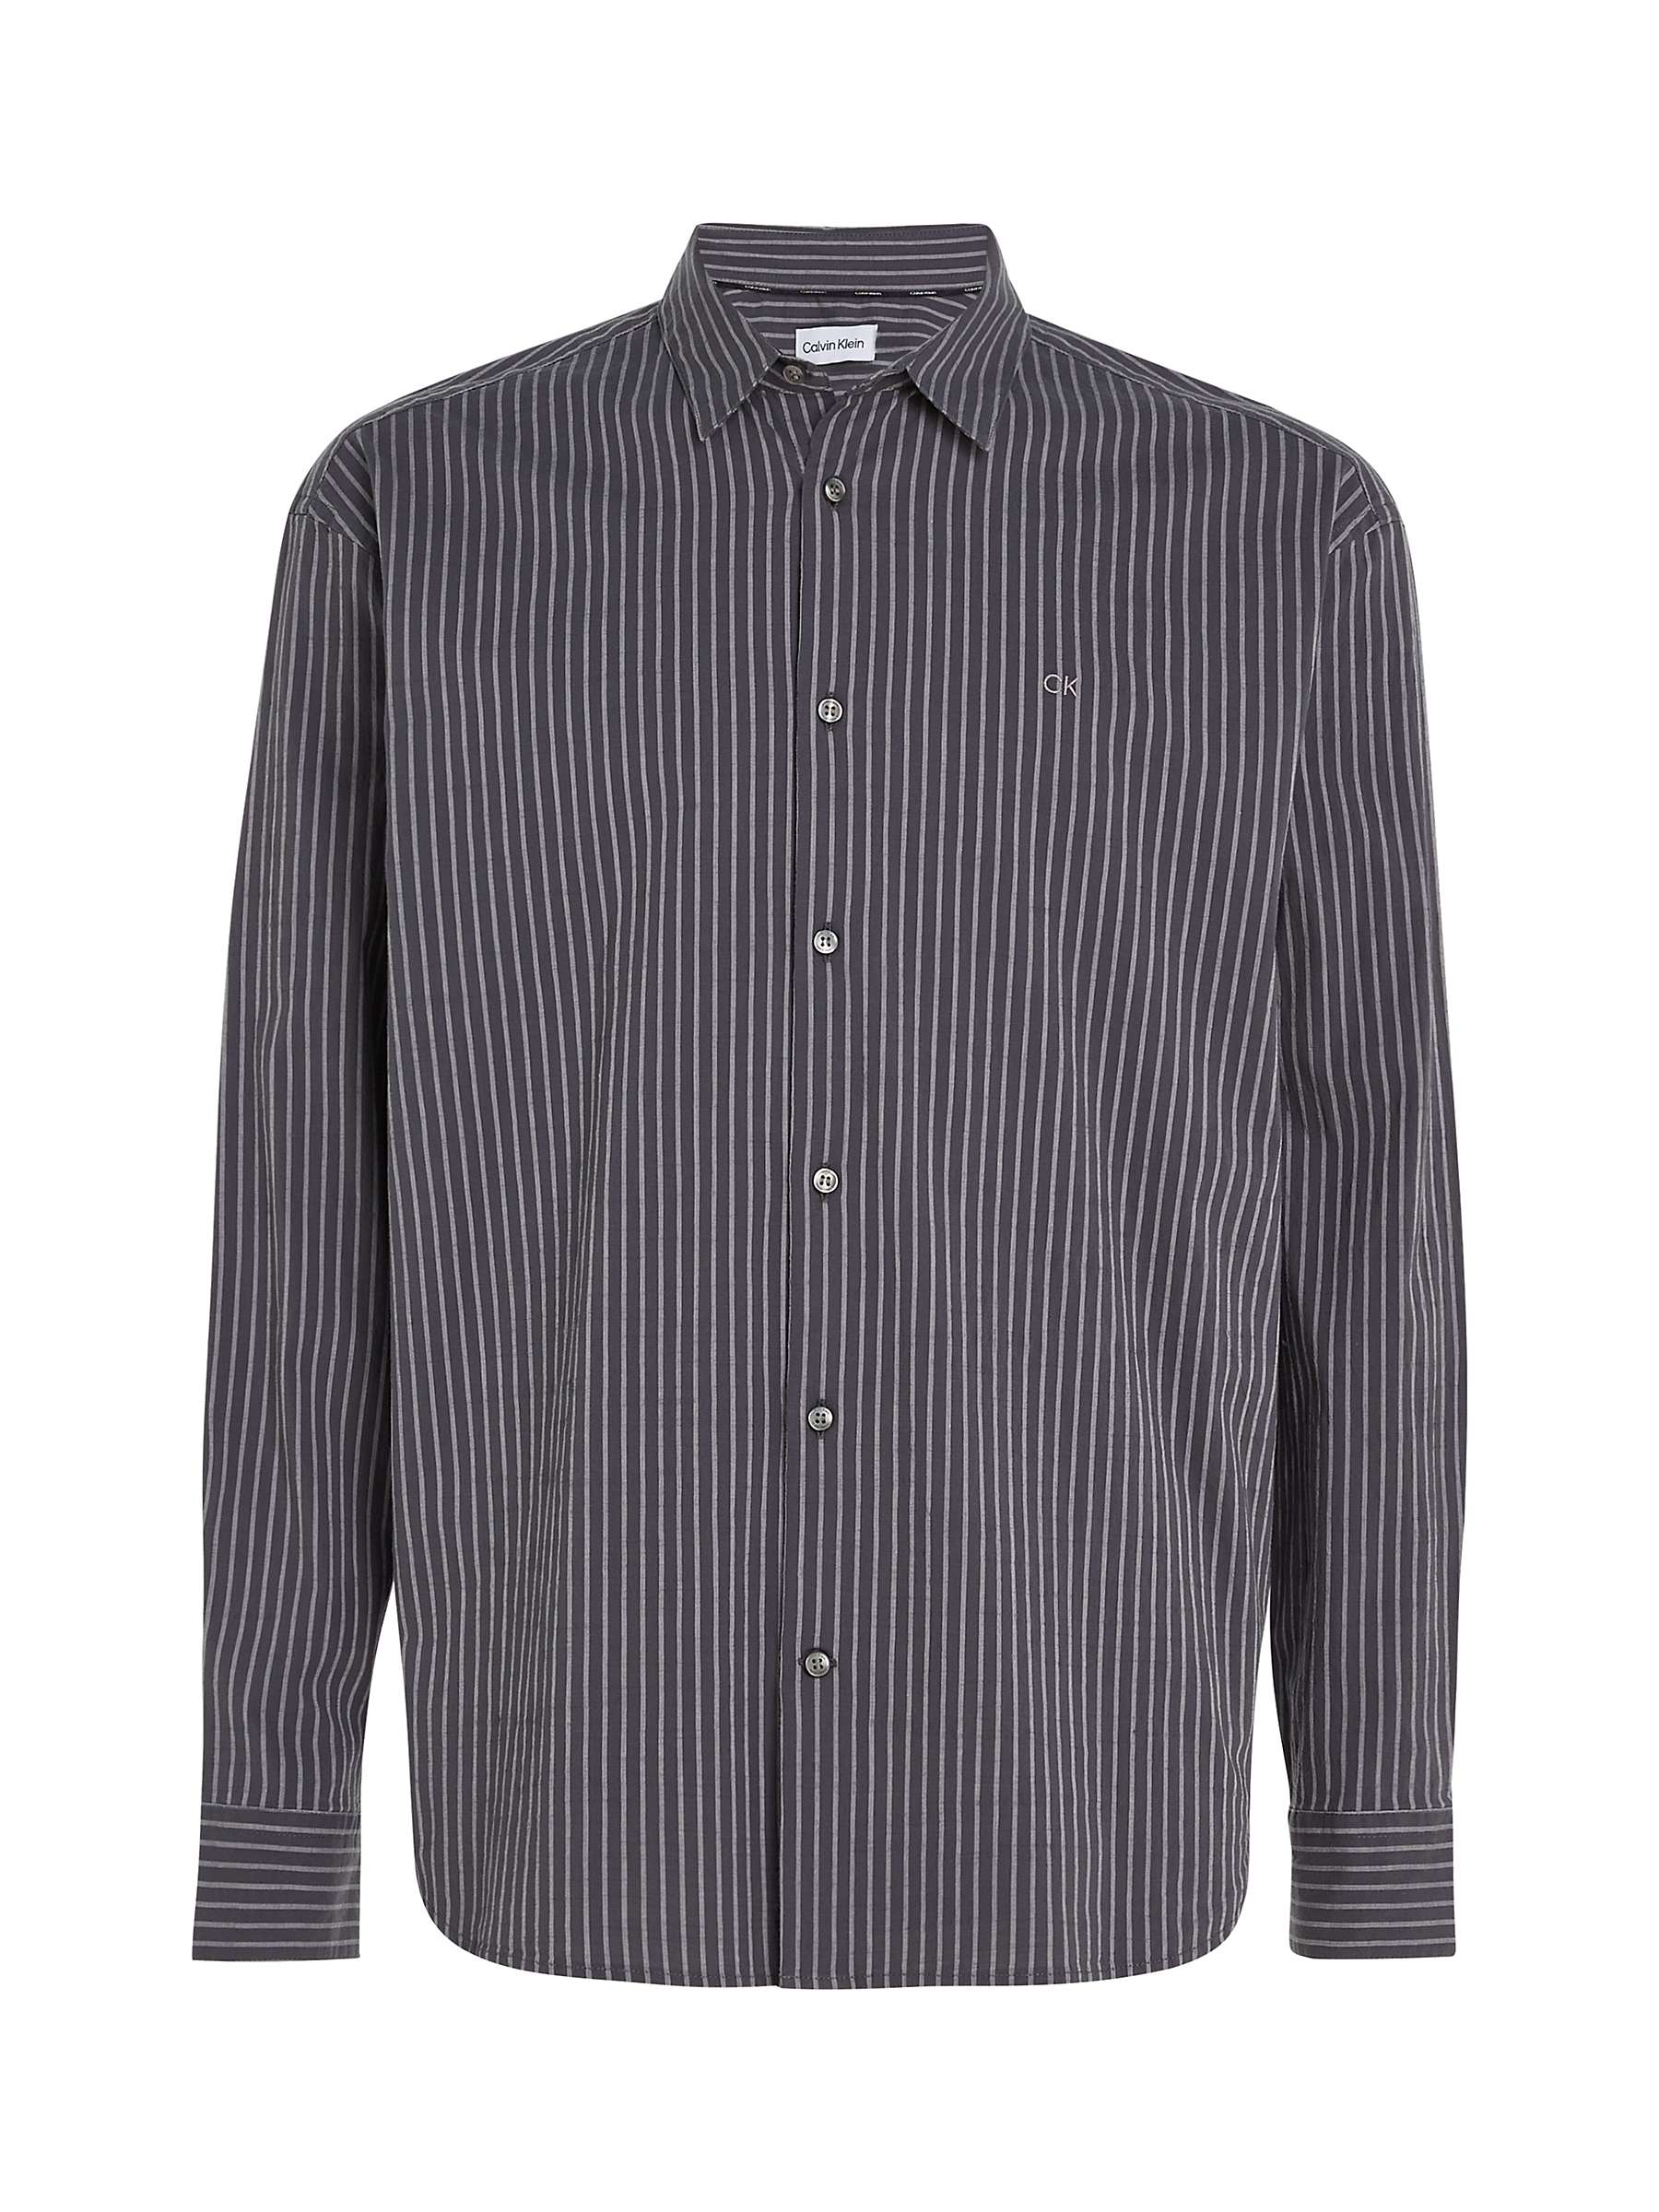 Buy Calvin Klein Stretch Stripe Long Sleeve Shirt, Grey Online at johnlewis.com